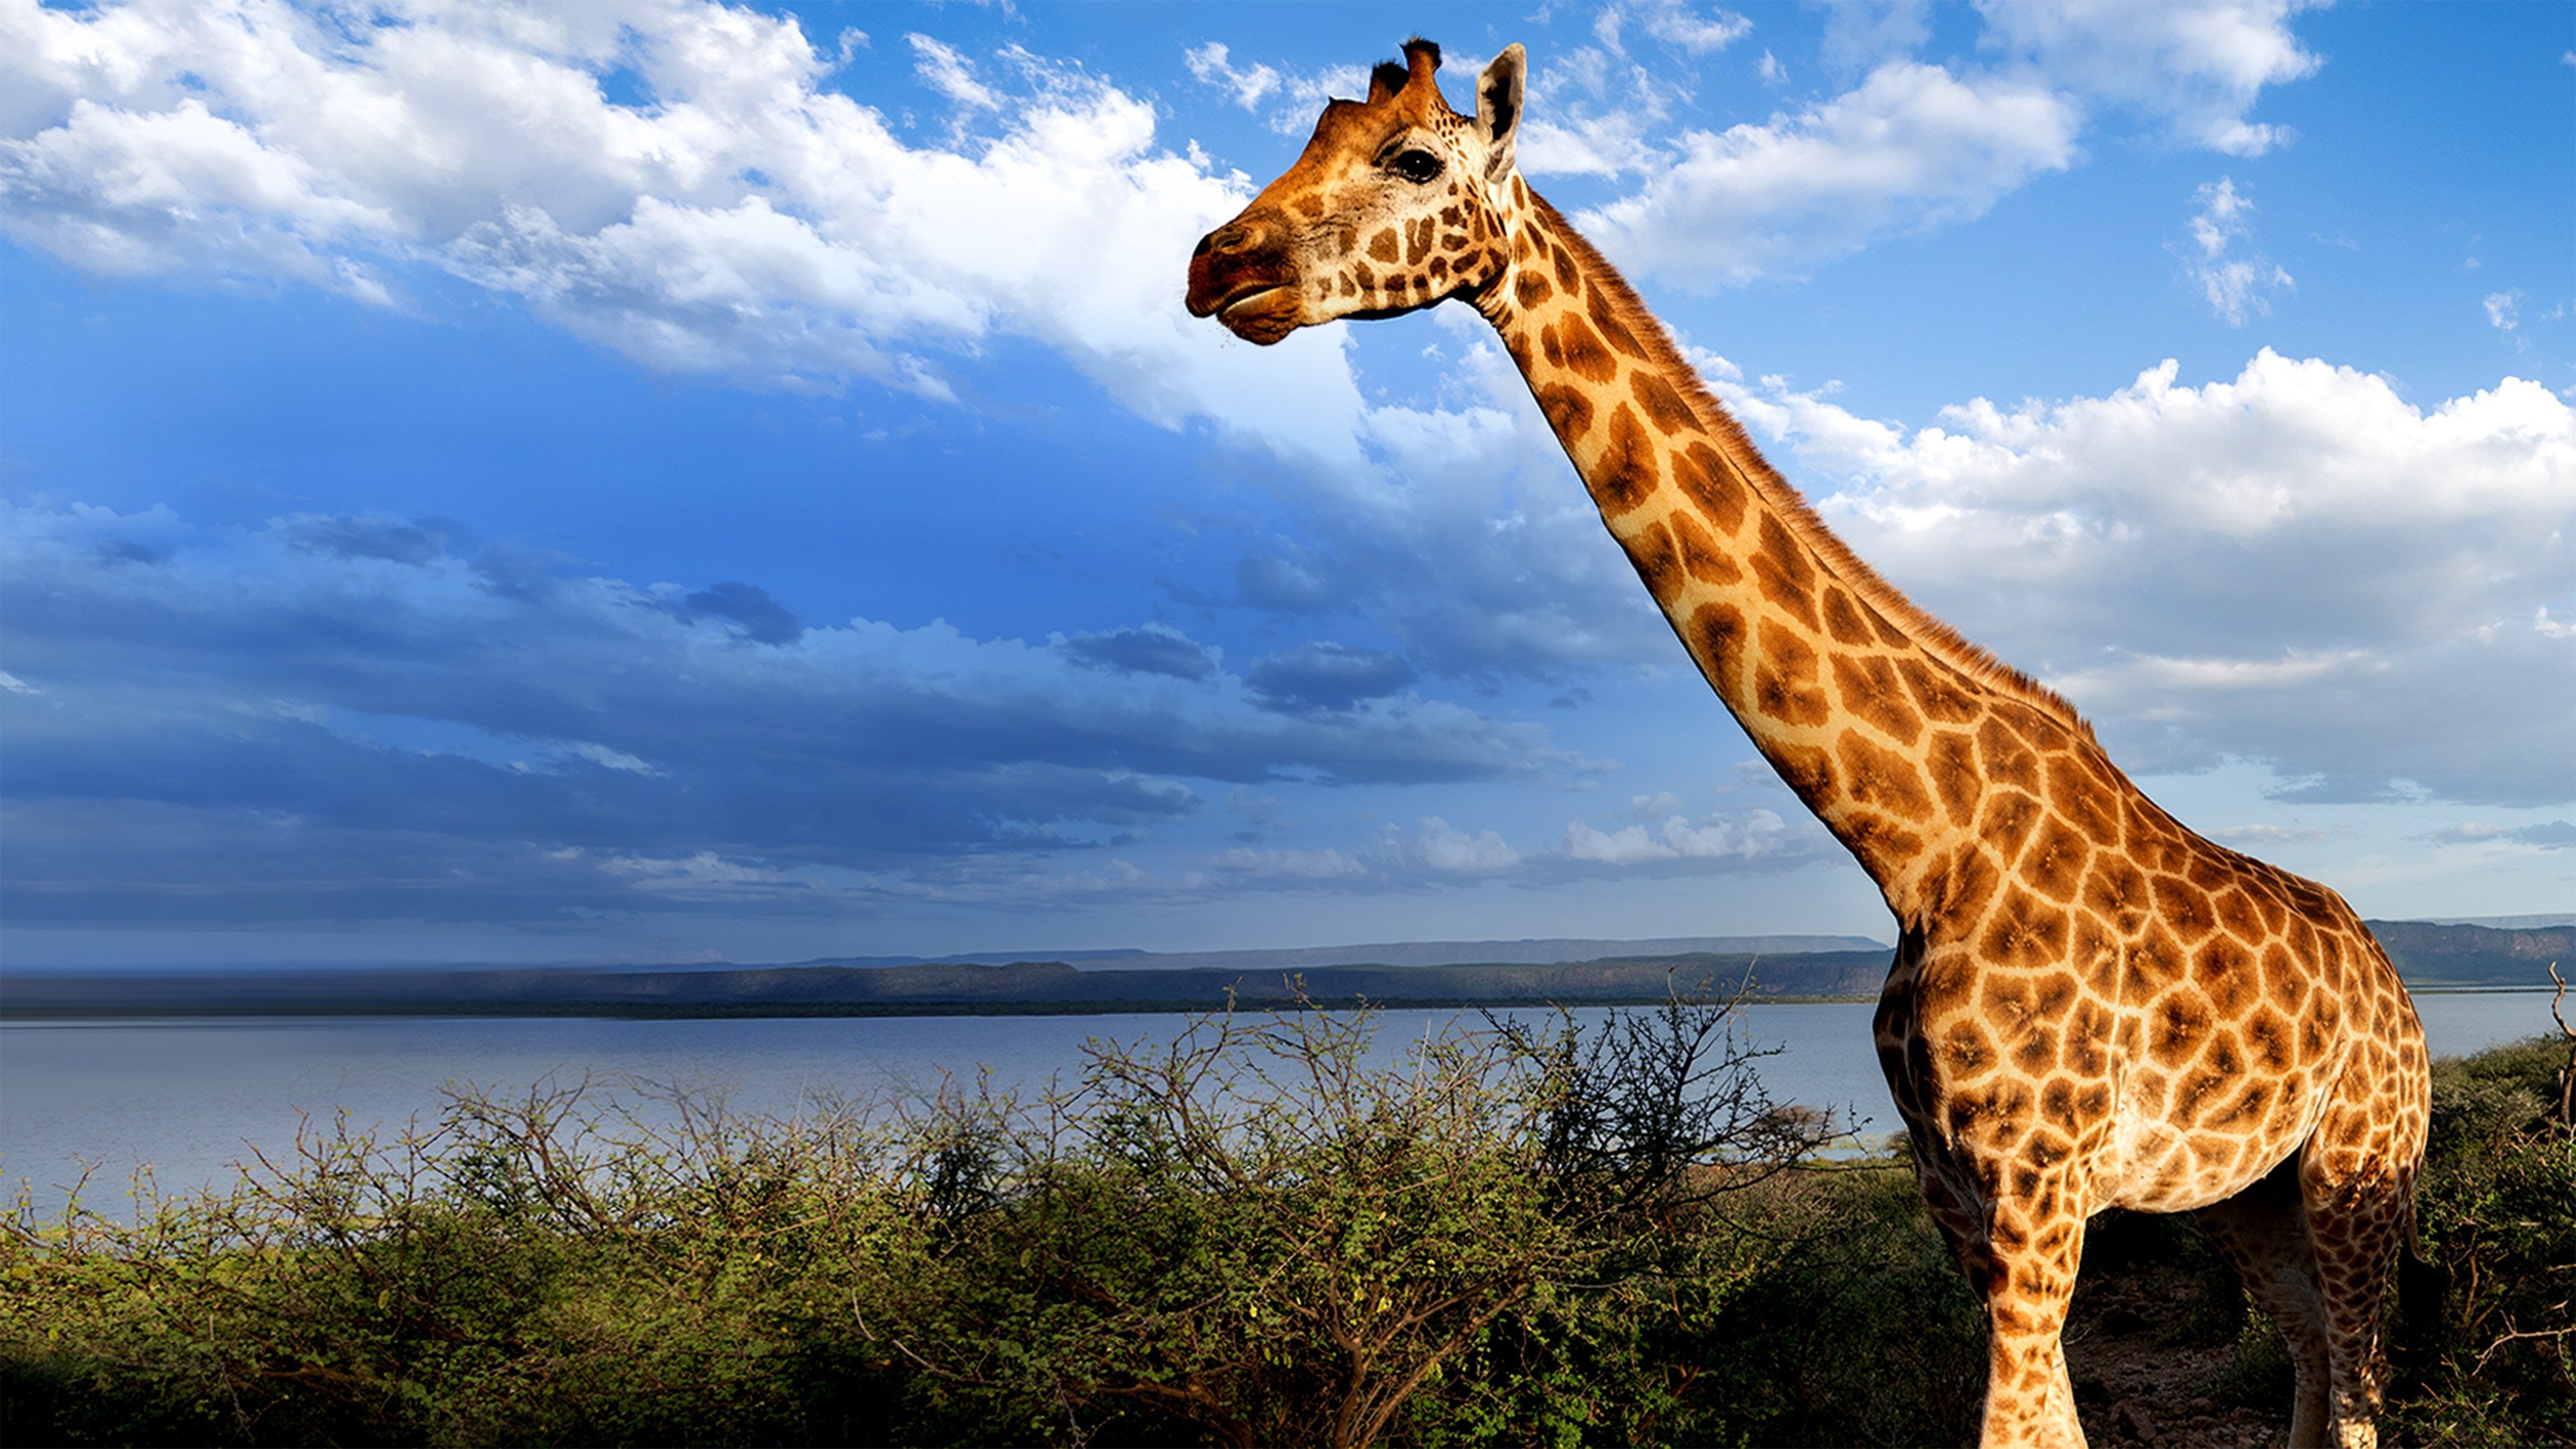 Saving Giraffes: The Long Journey Home 